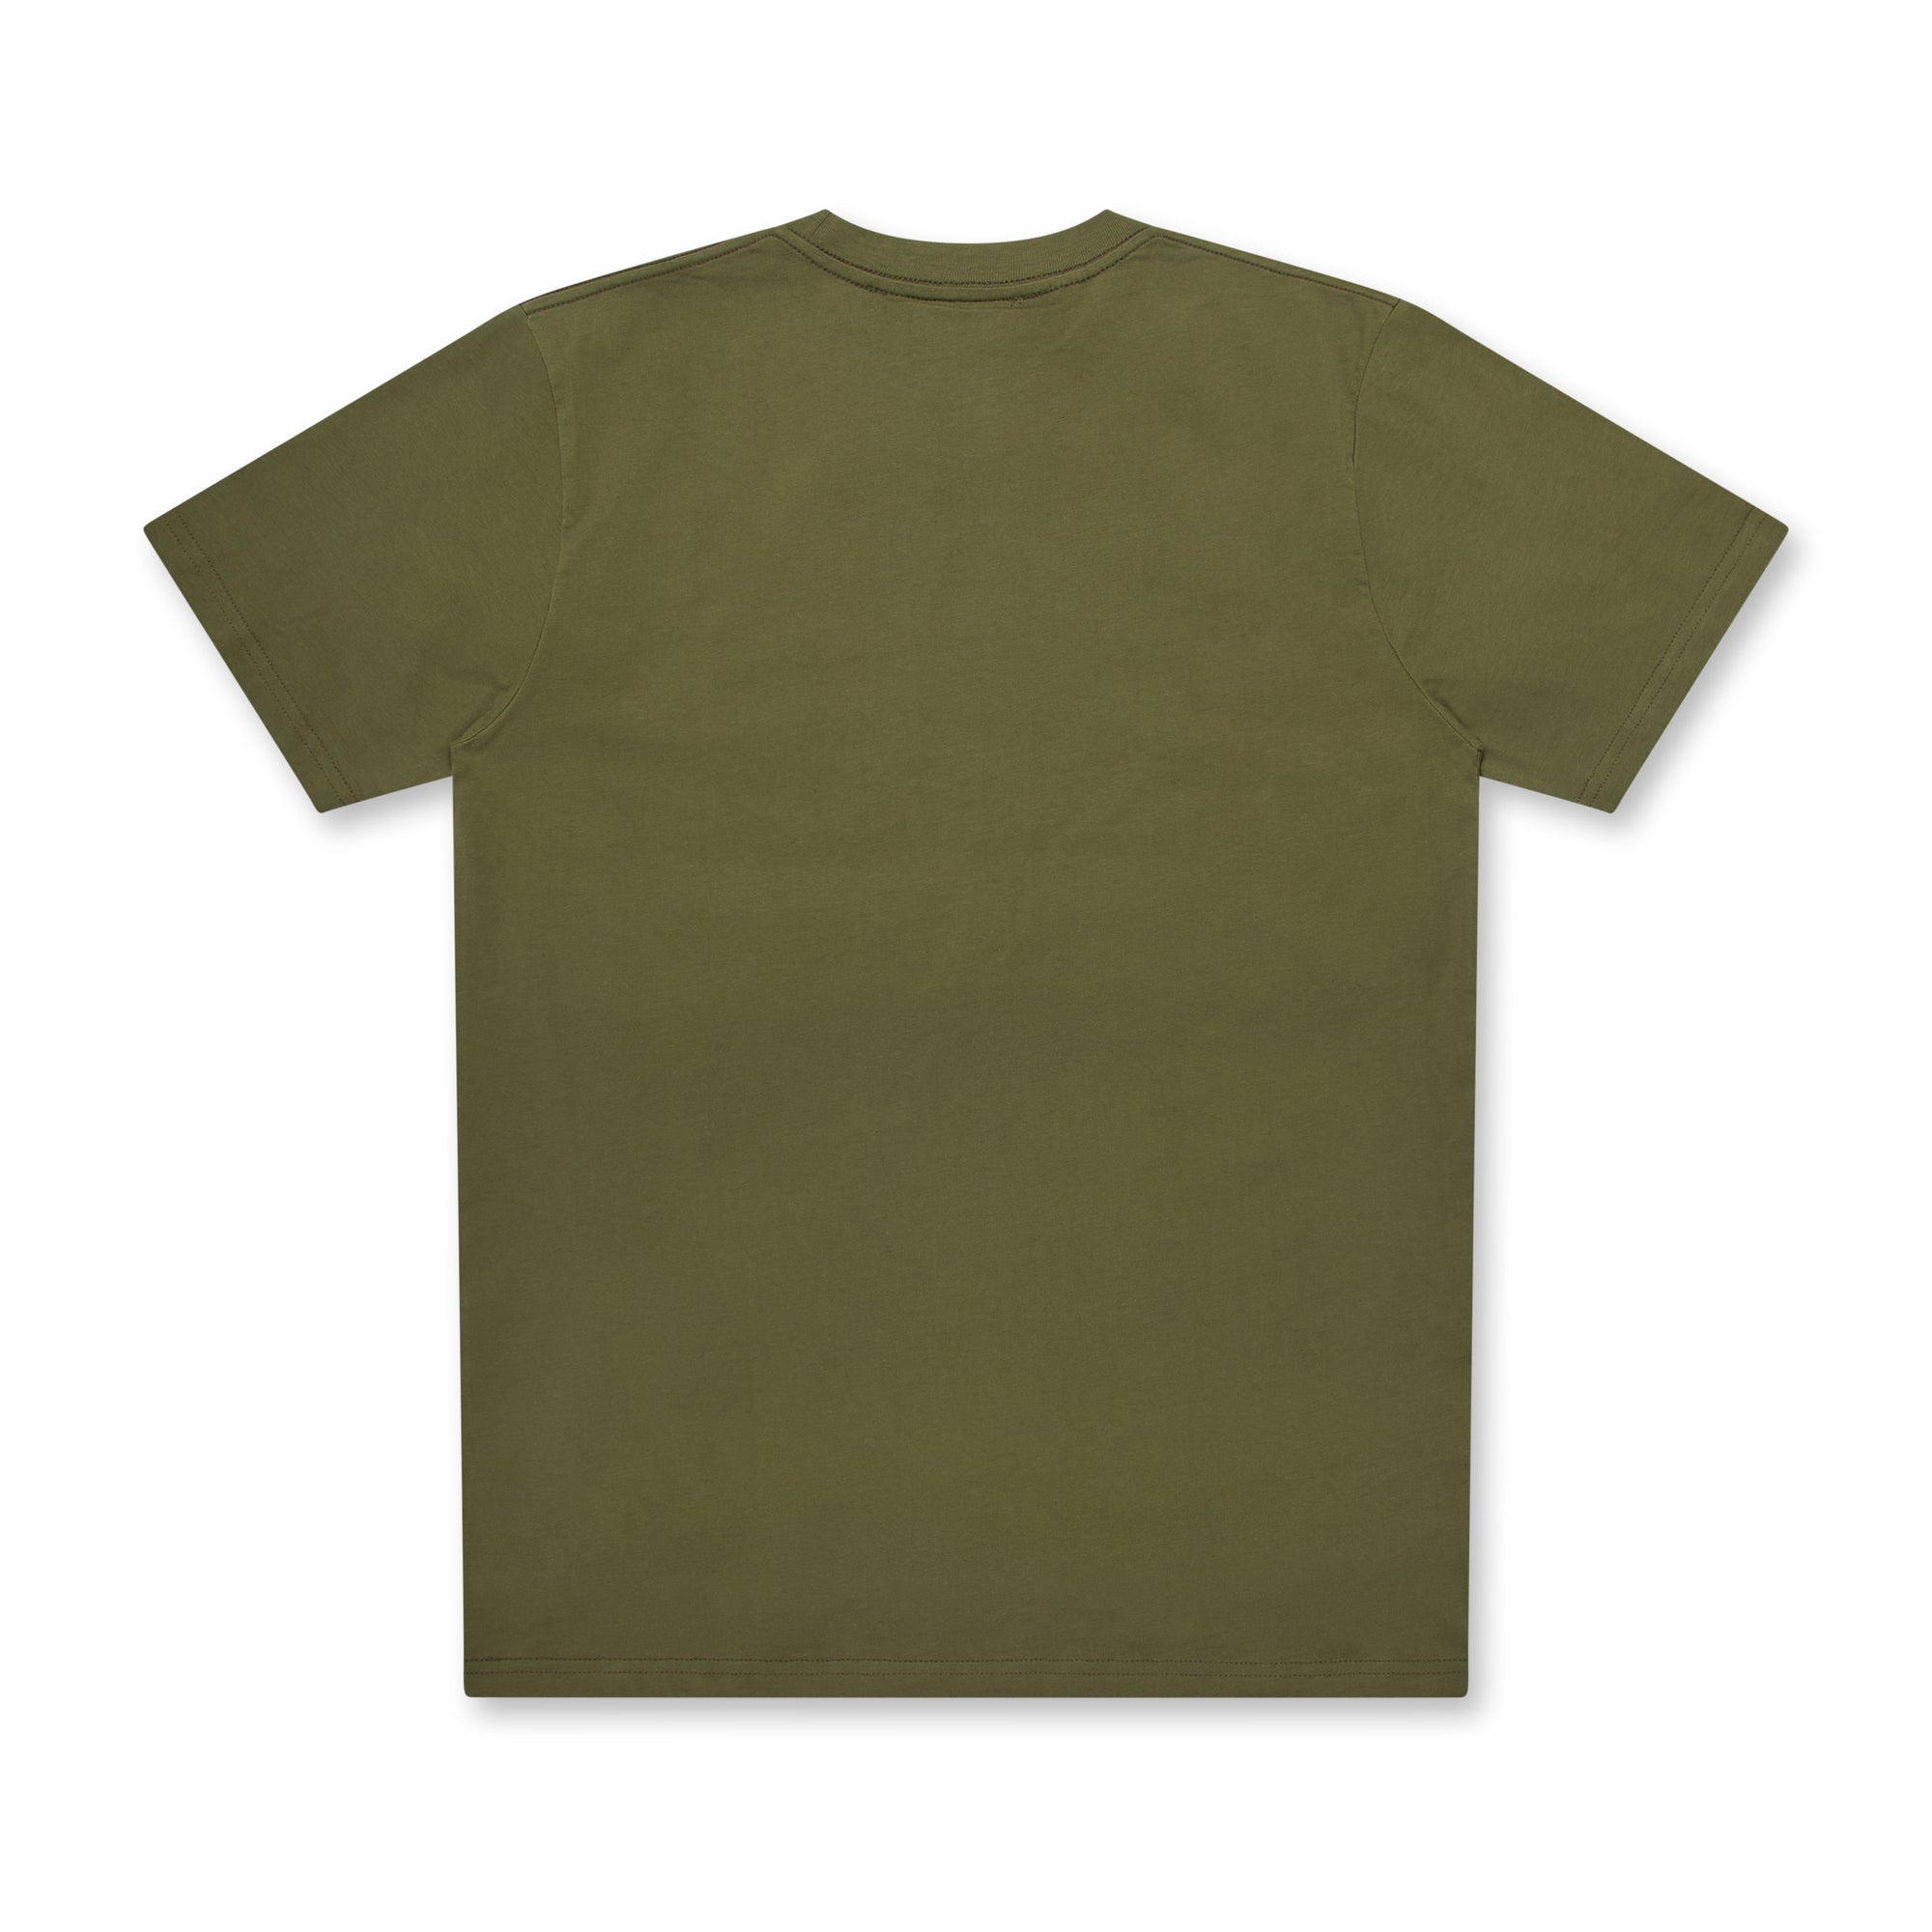 Lifeisunfair - Doodle T-Shirt - (Army) view 2